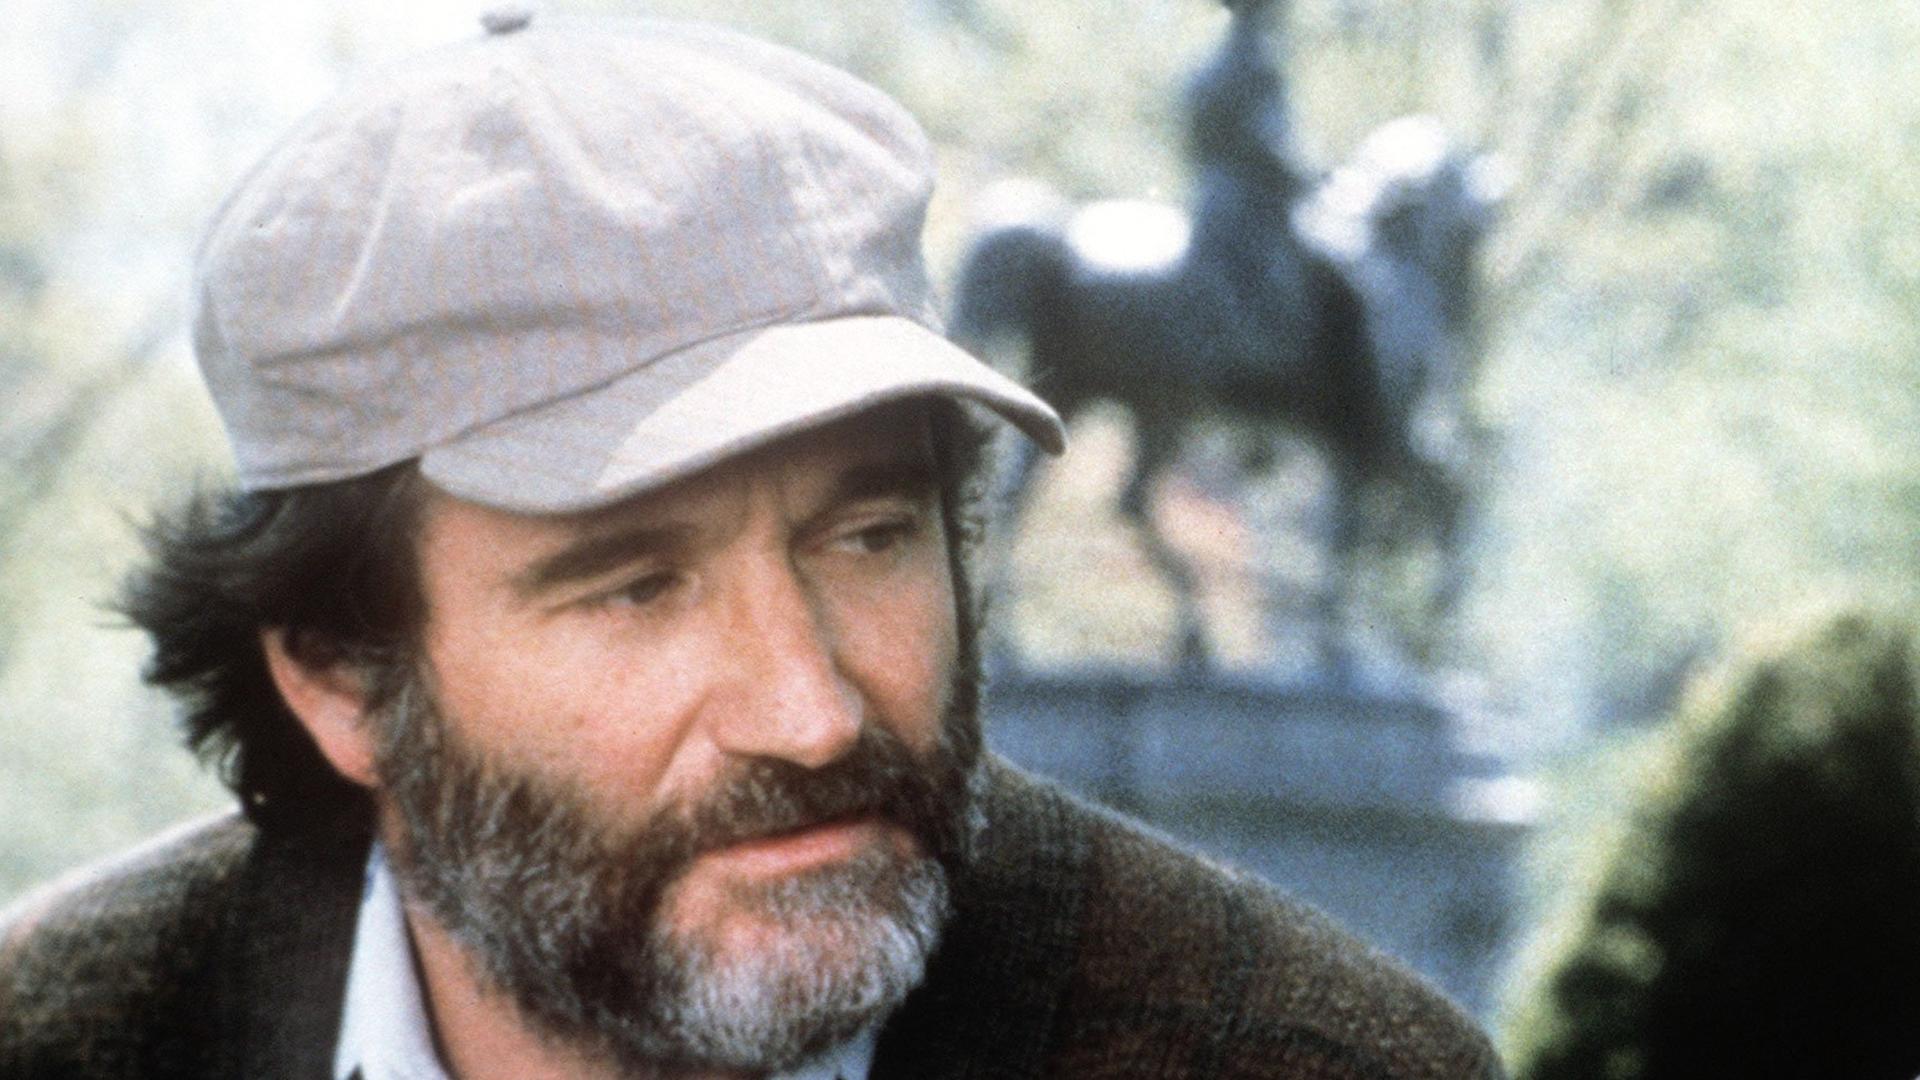 Szene mit Robin Williams in dem Kinofilm "Good Will Hunting" von Gus Van Sant